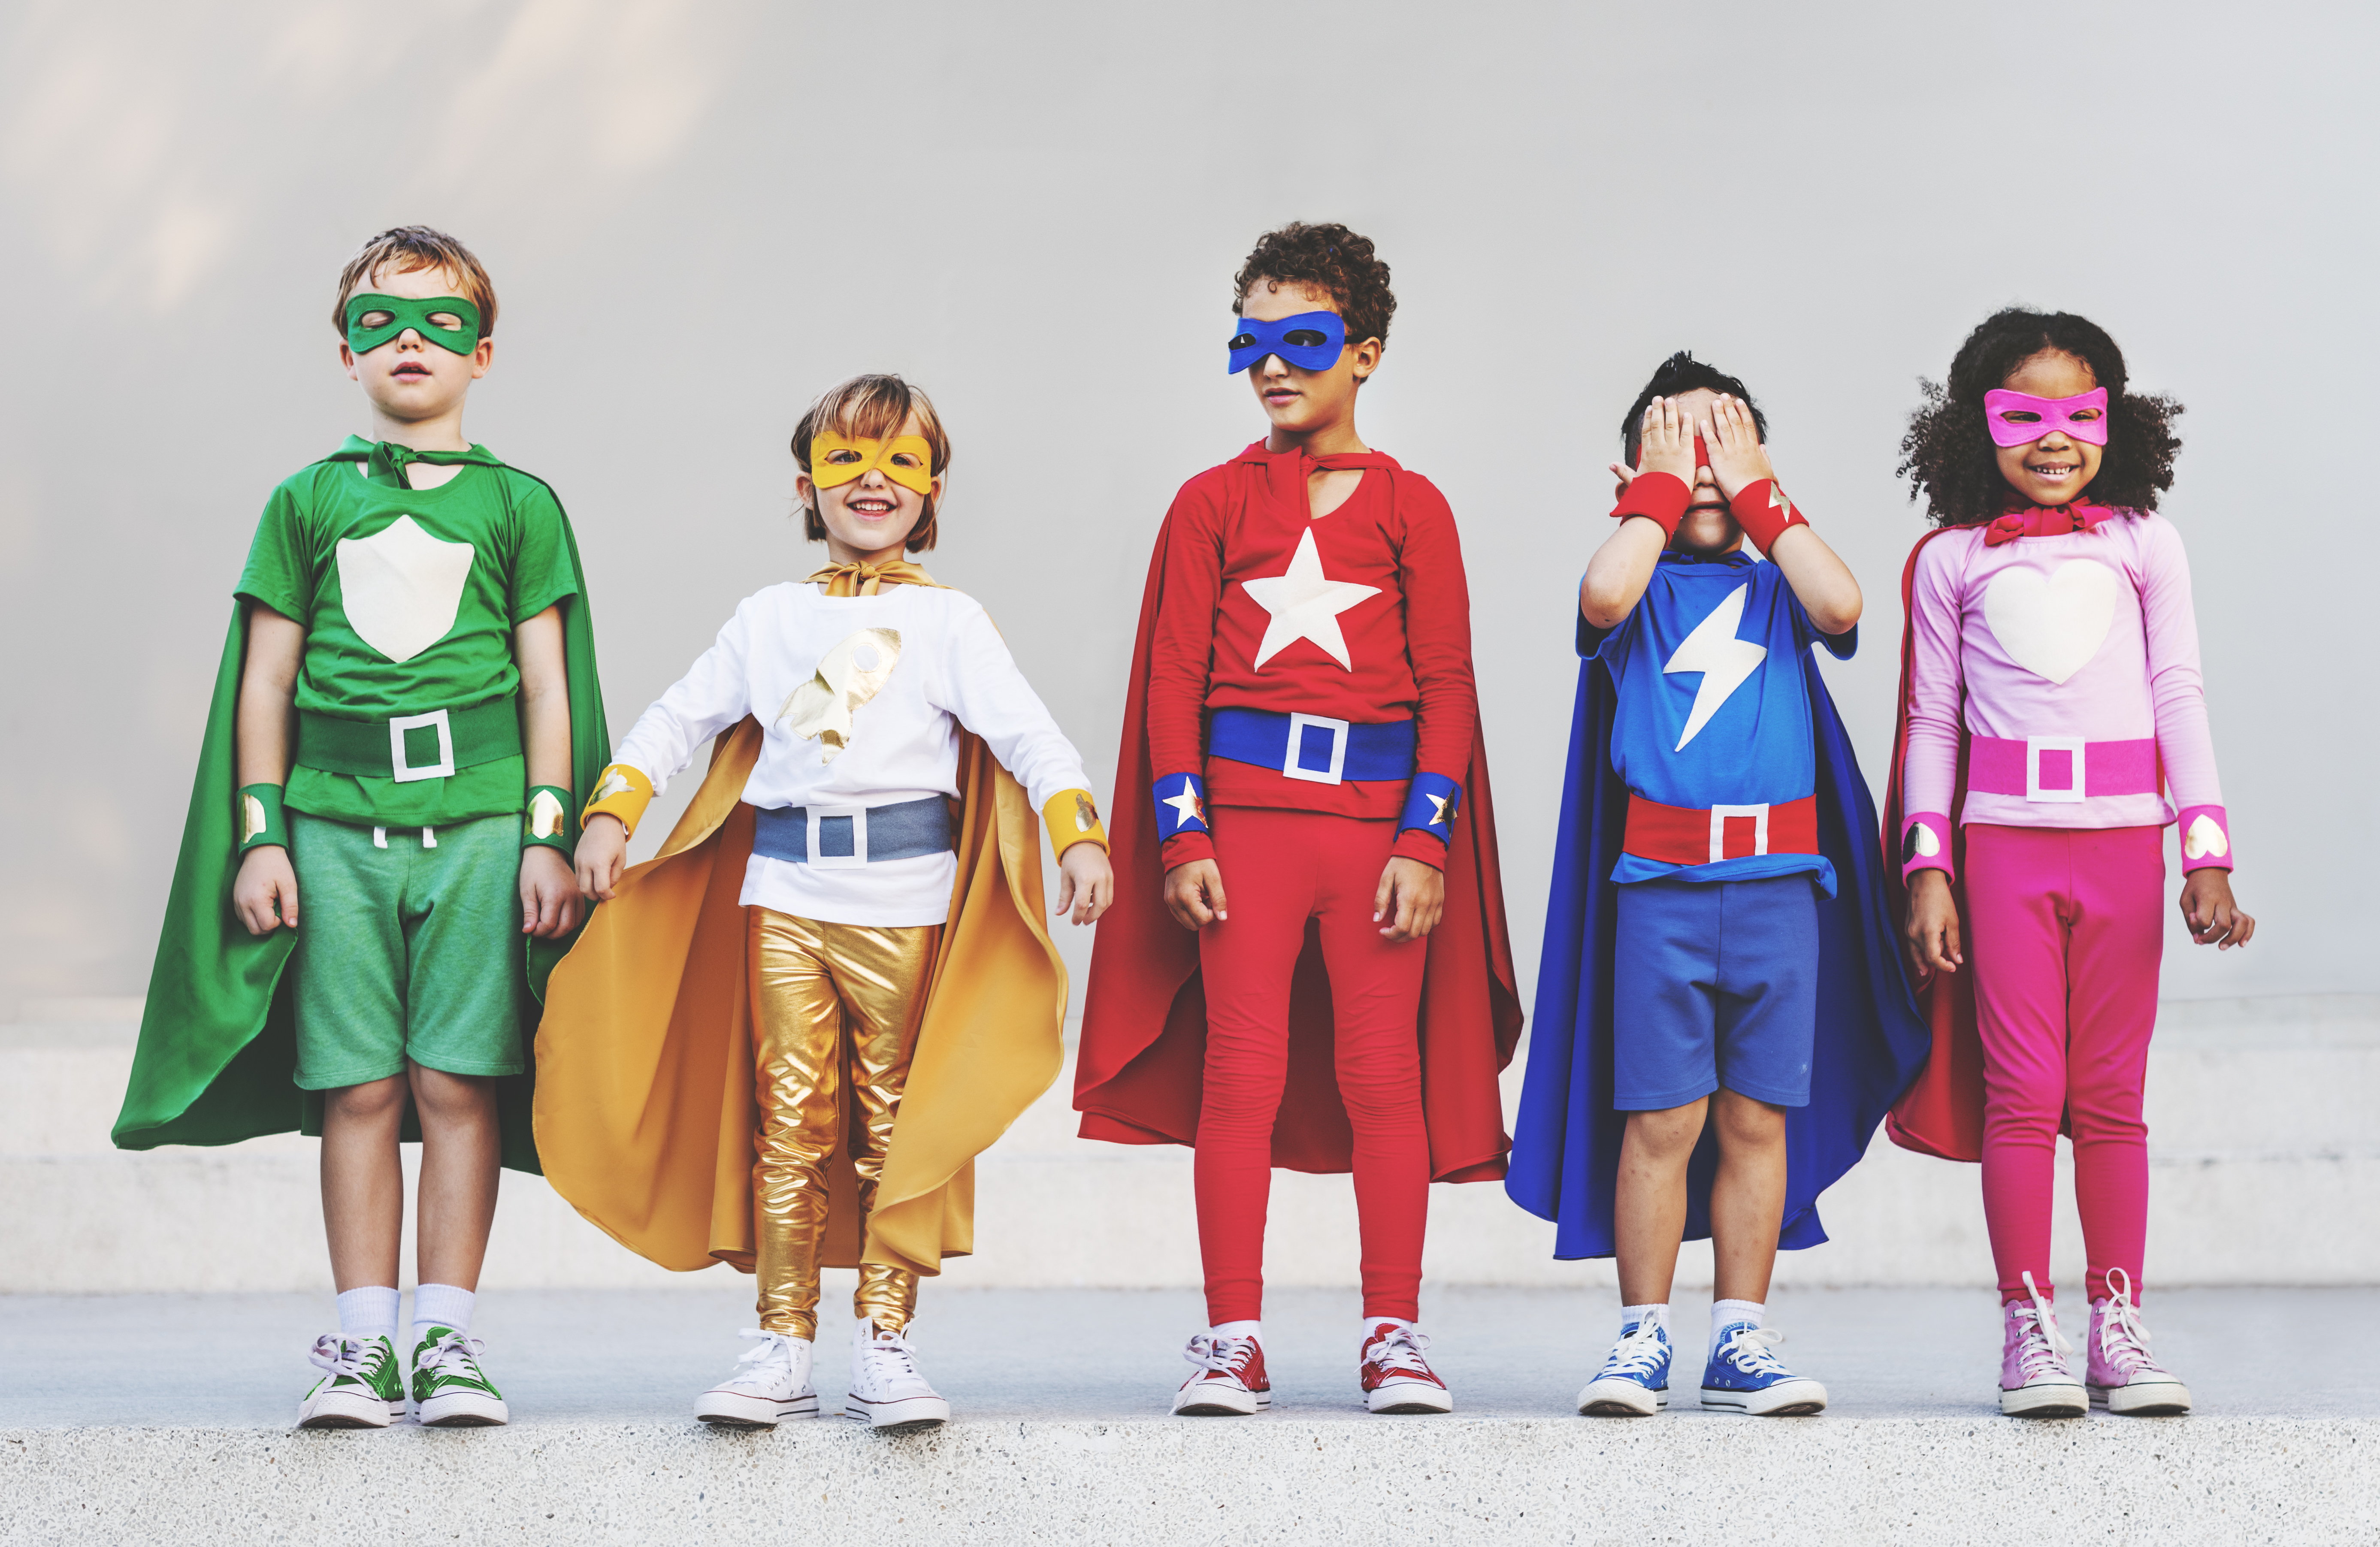 Superhero kids in costumes.